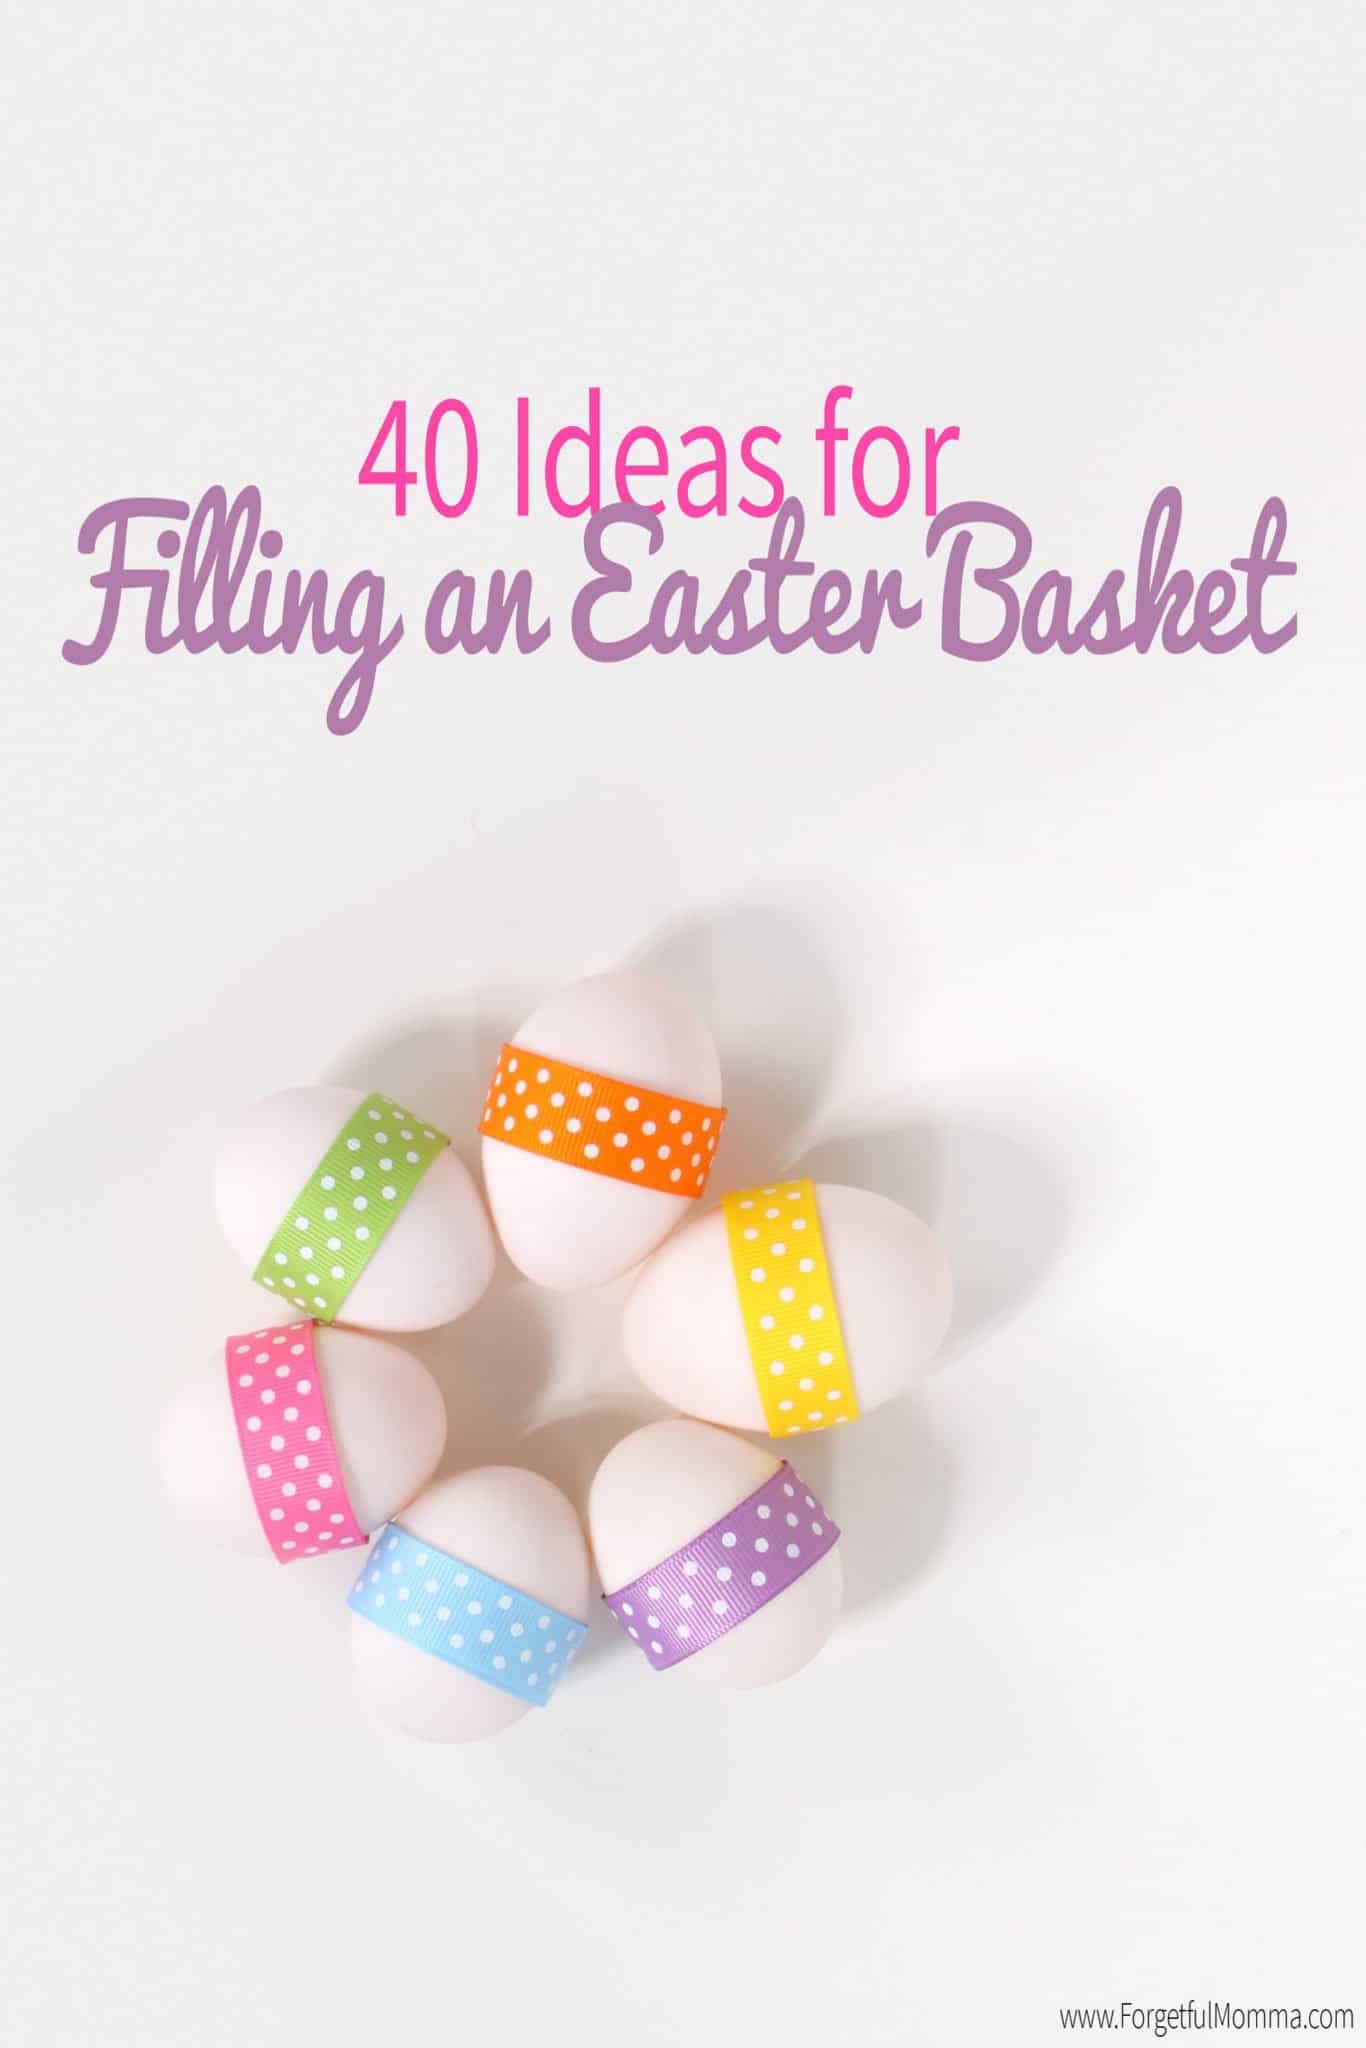 40 Ideas for Filling an Easter Basket